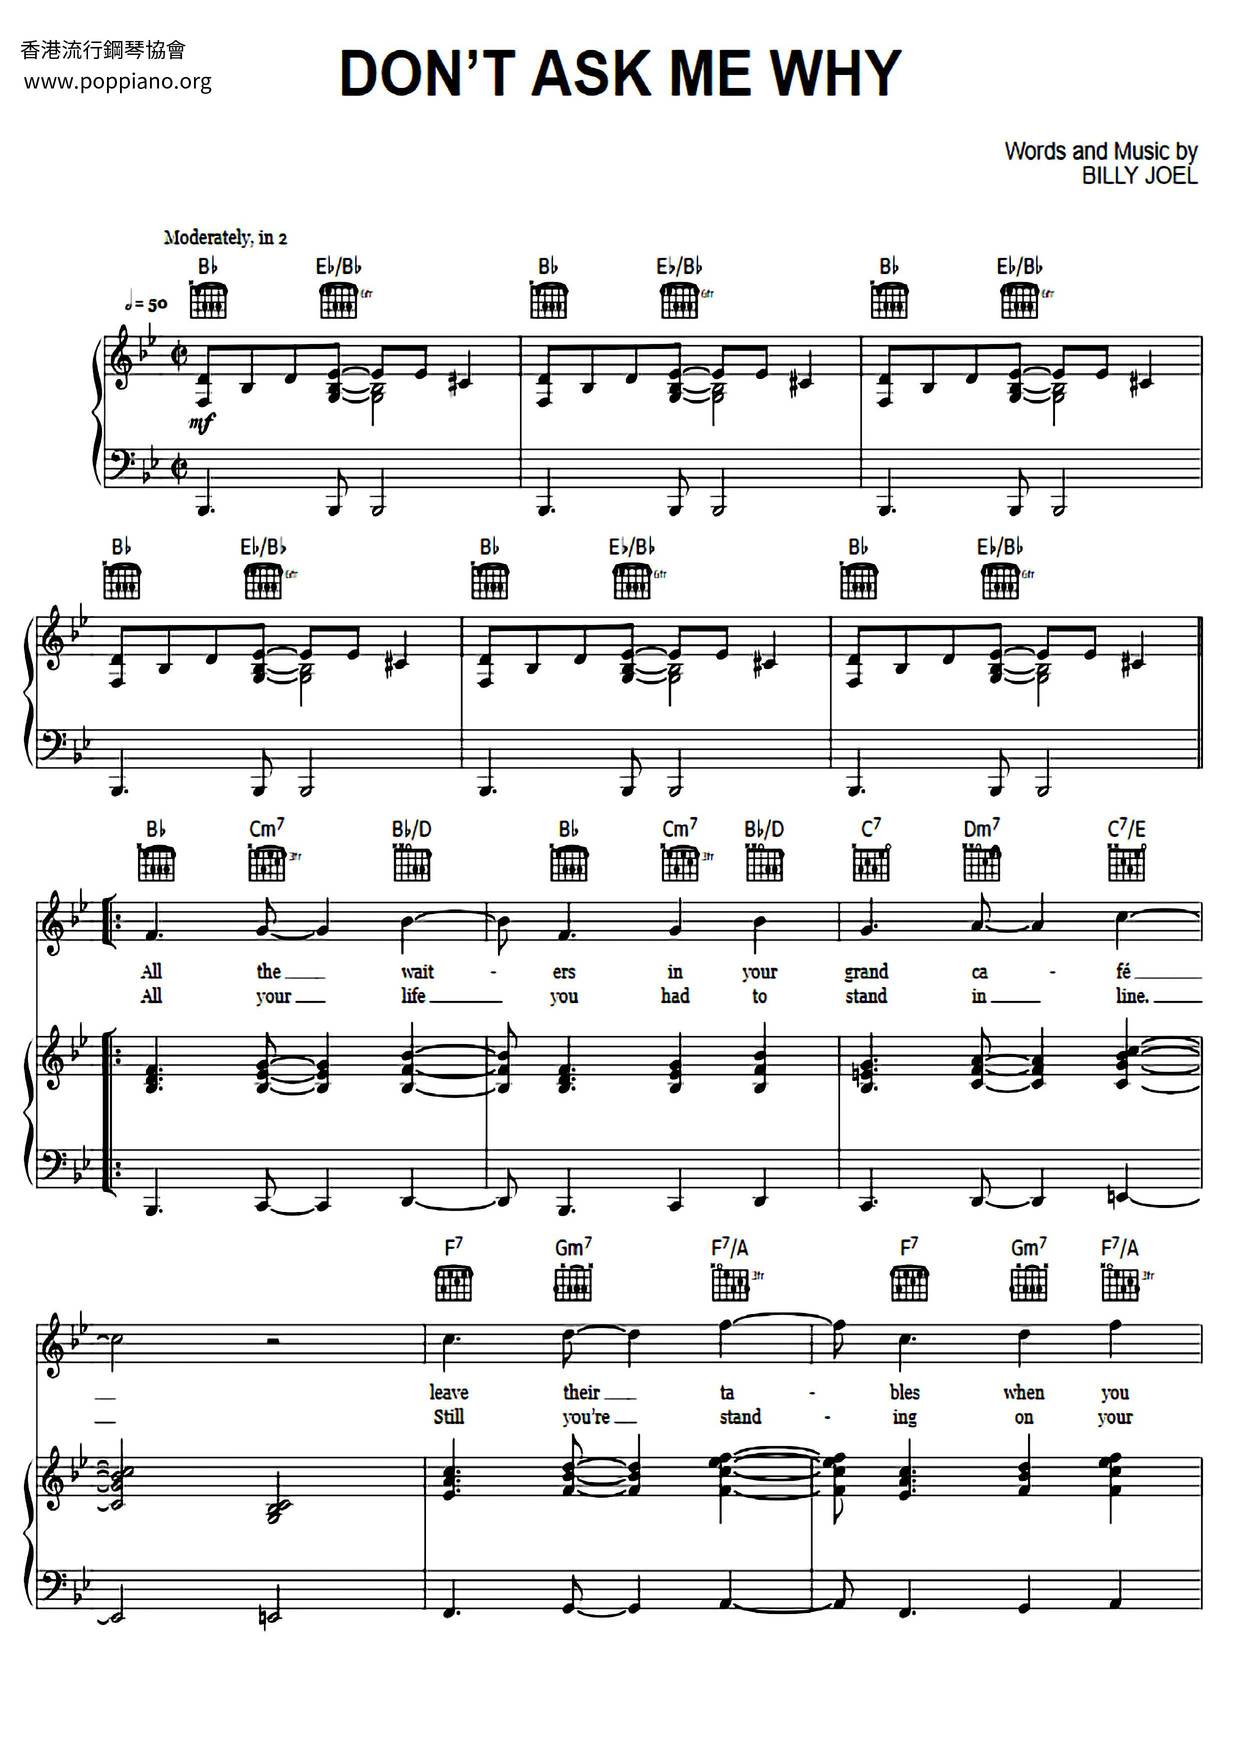 Billy Joel-Don t Ask Me Why Sheet Music pdf - Free Score